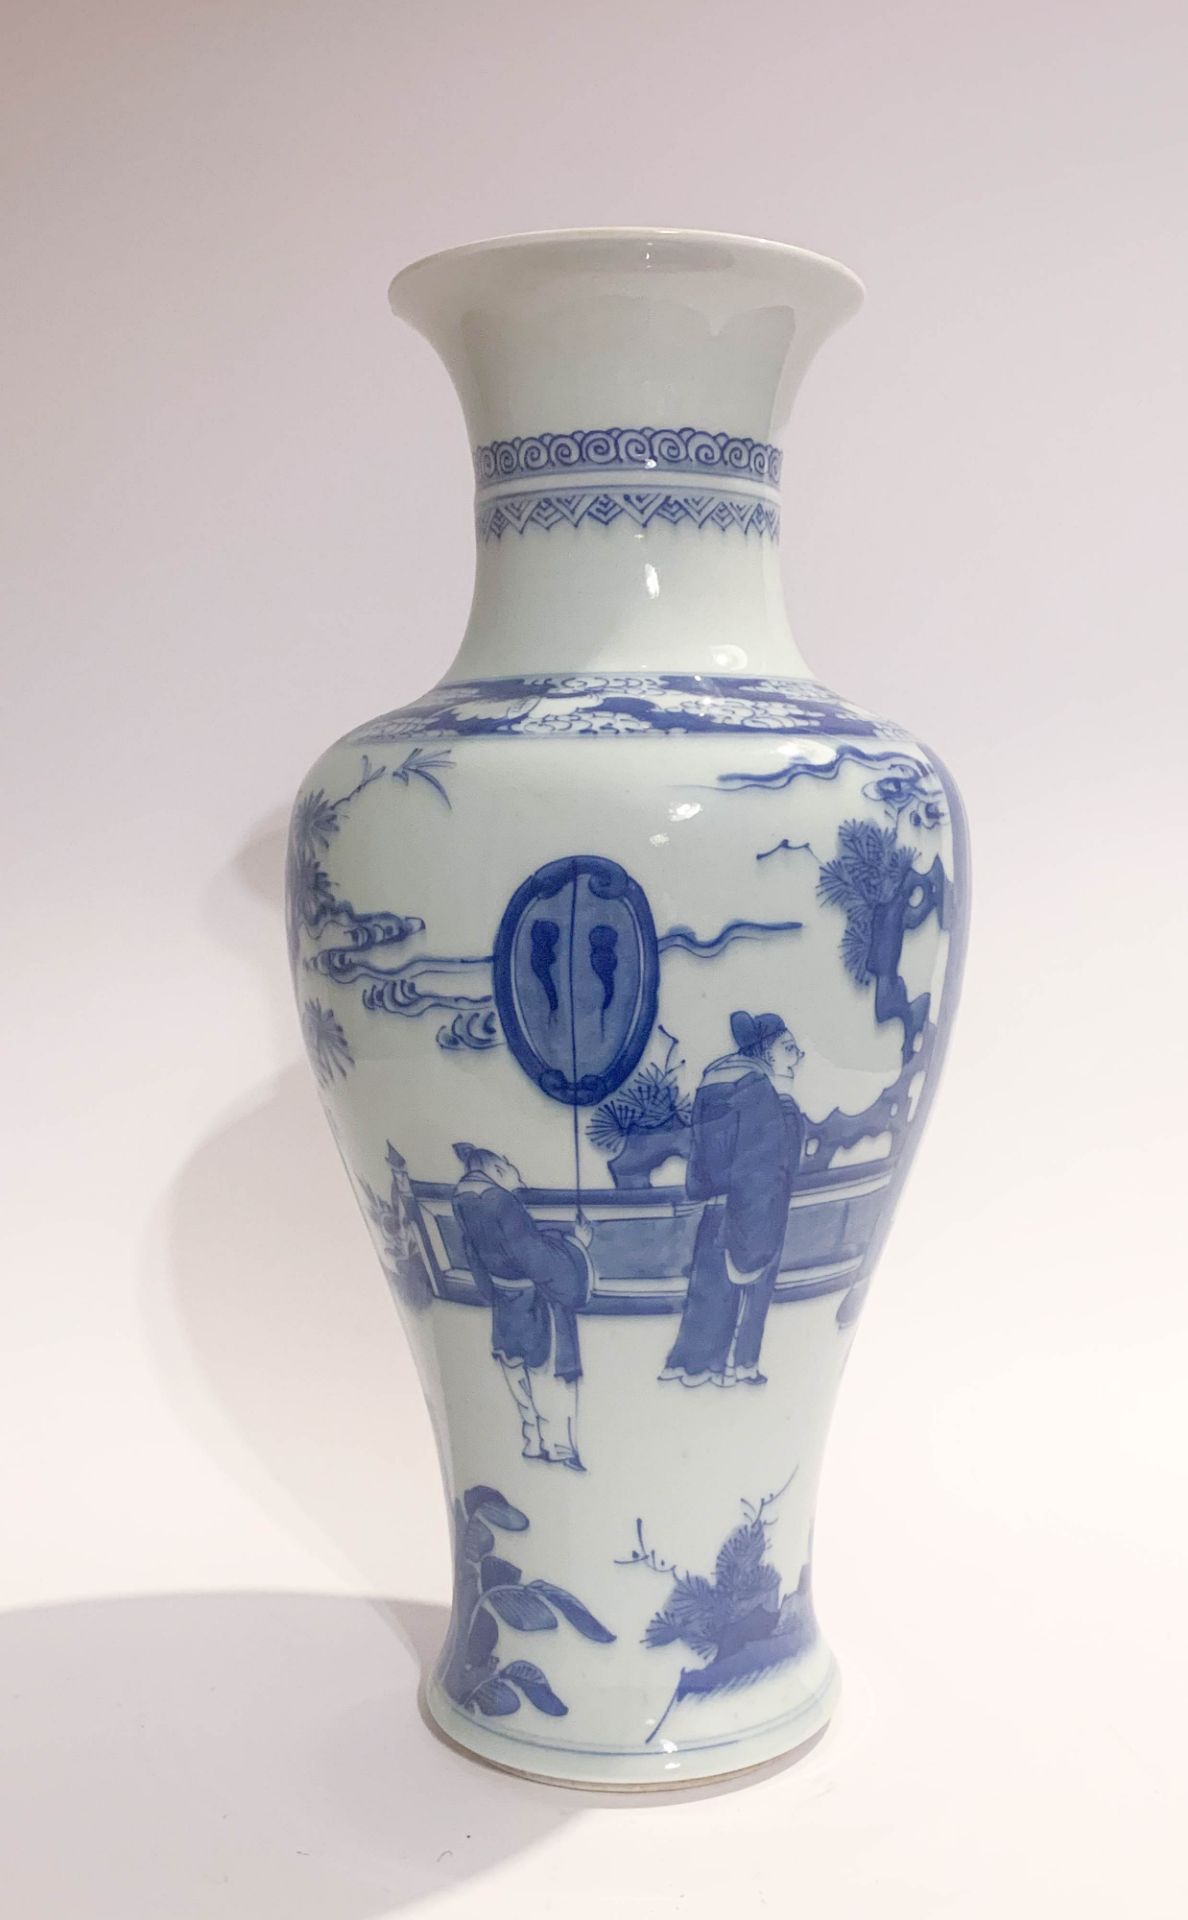  Floor vase China Qing dynasty 19th century